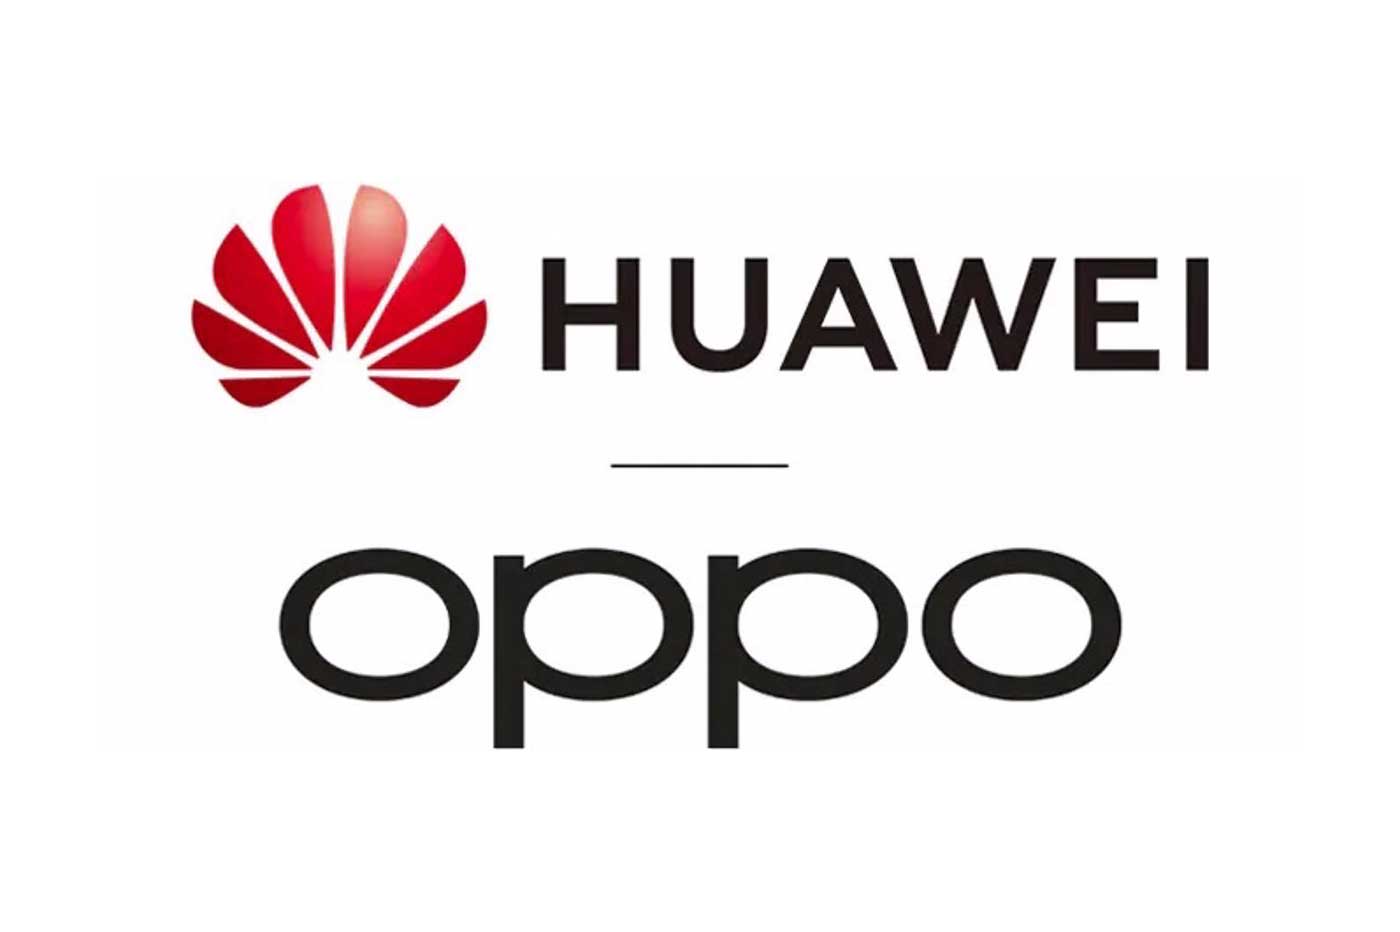 Huawei & Oppo accord